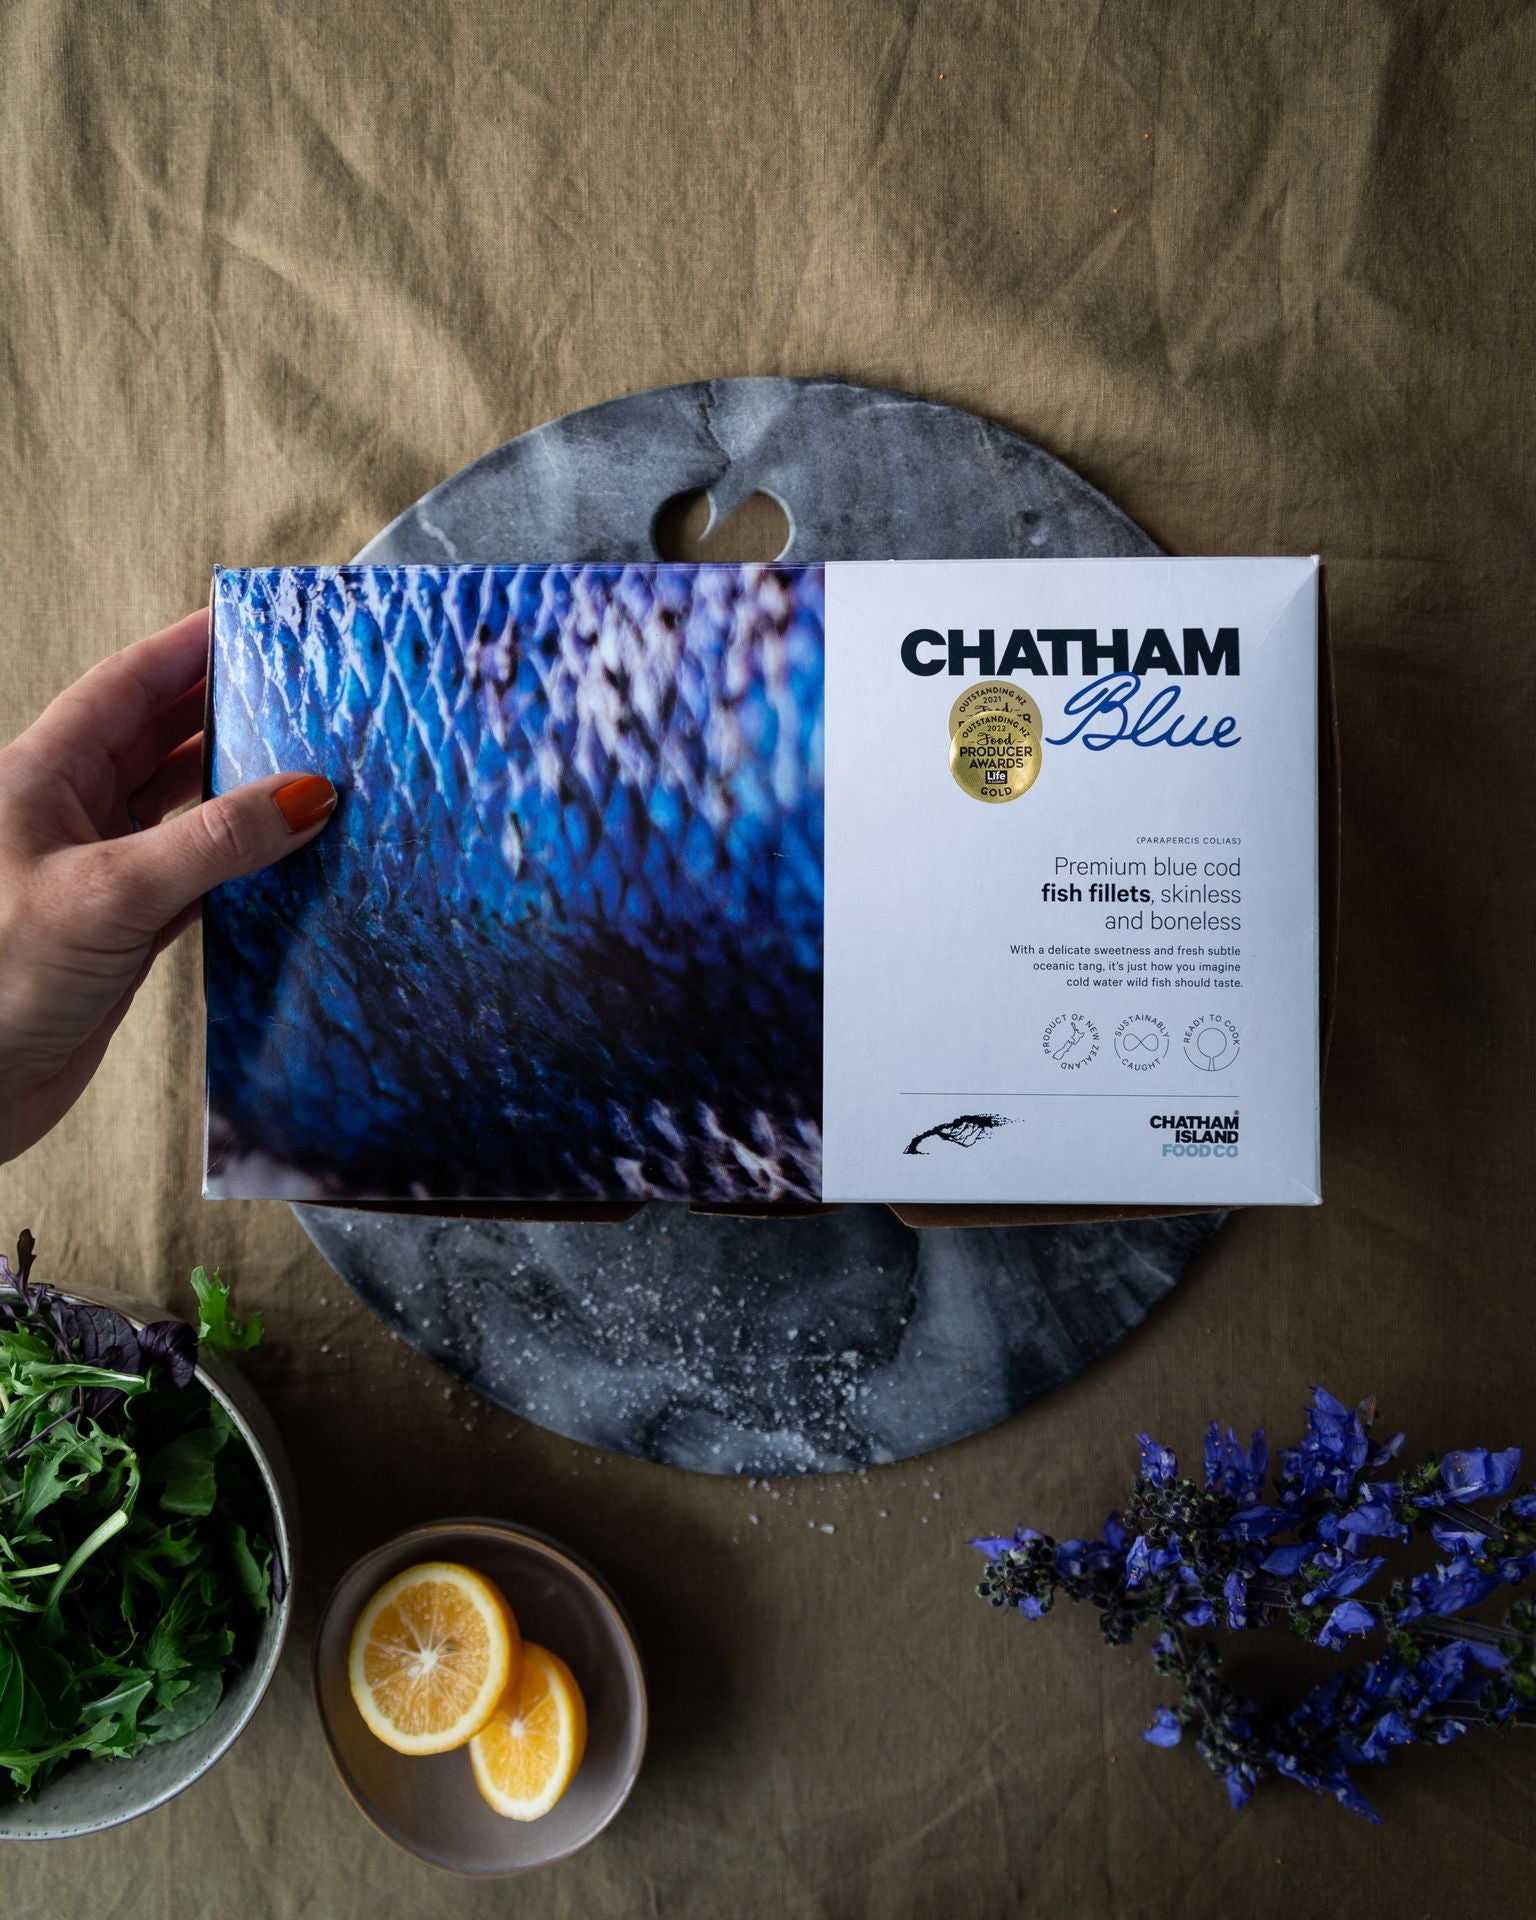 Chatham Blue & Crayfish Tails